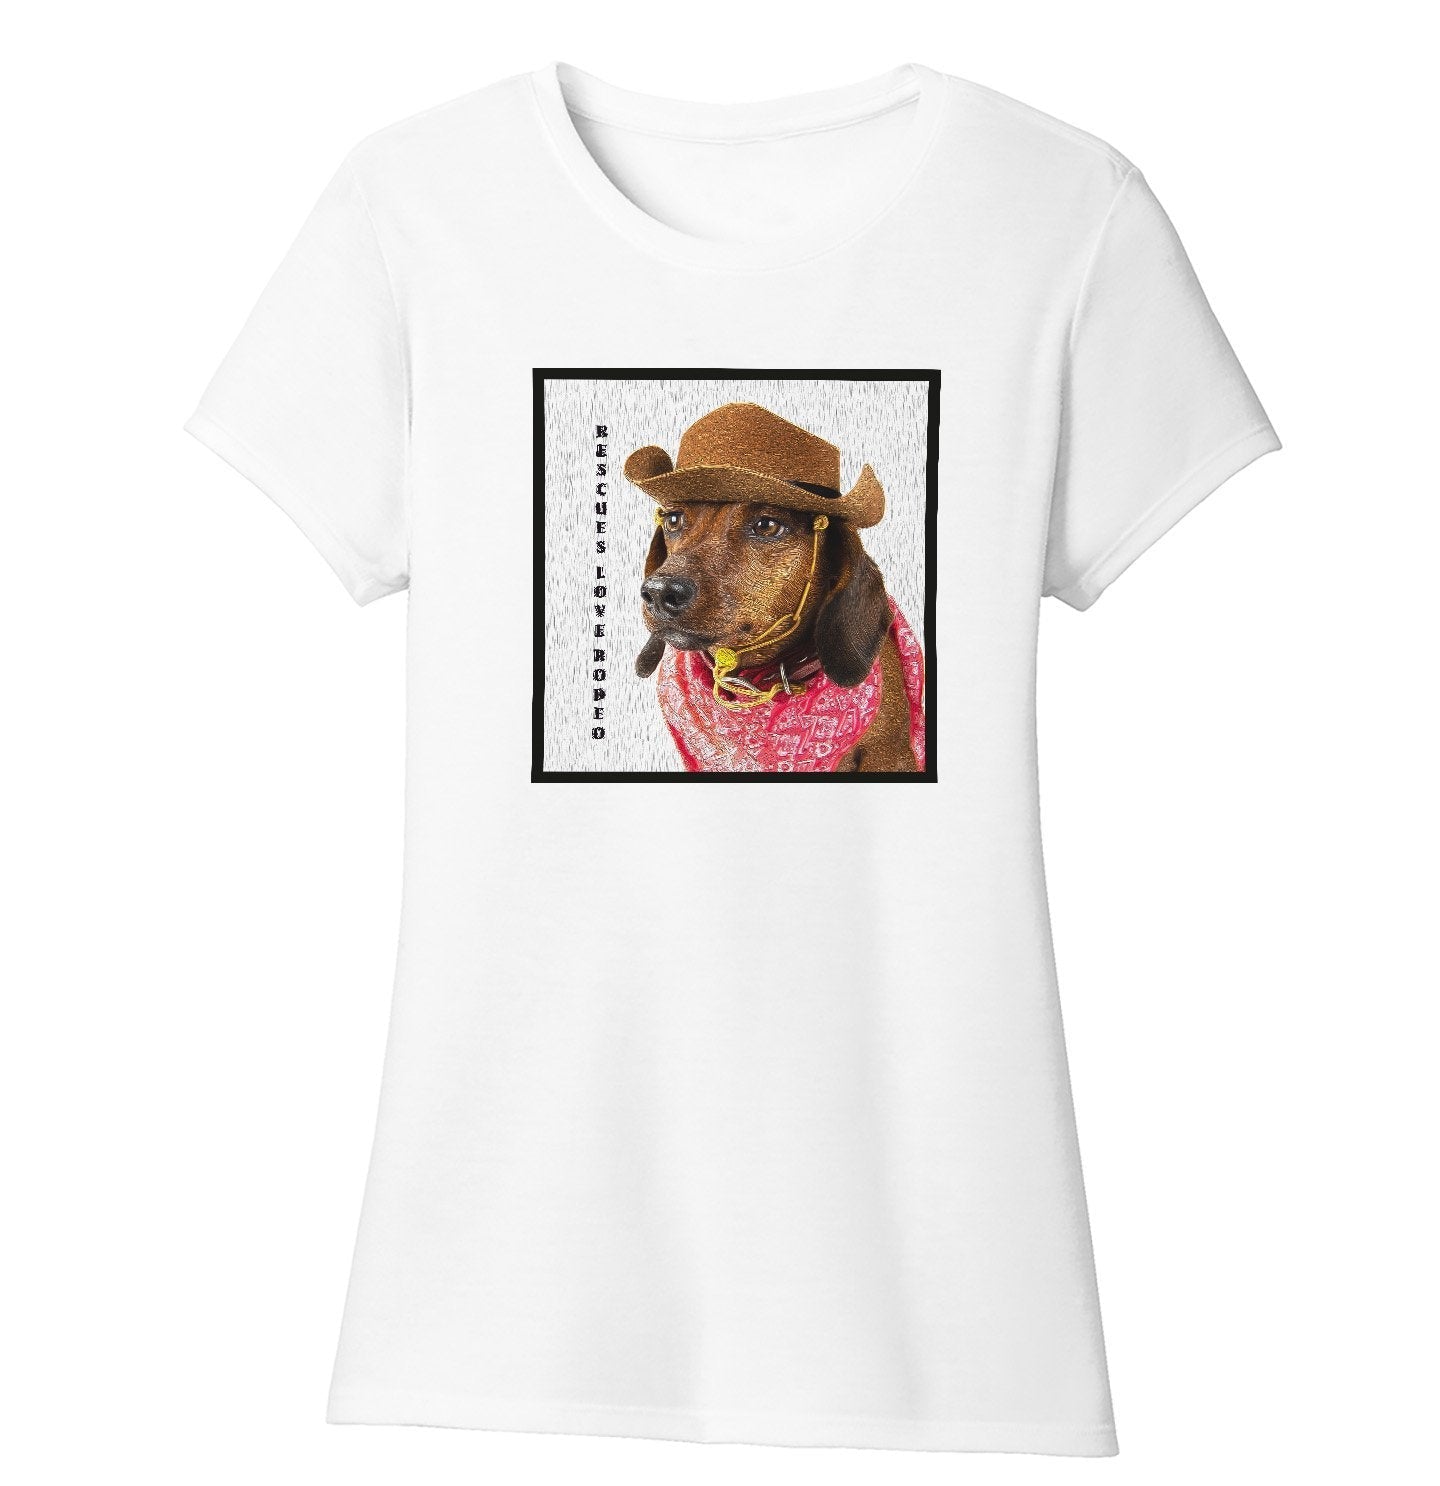 Rodeo Dachshund - Women's Tri-Blend T-Shirt